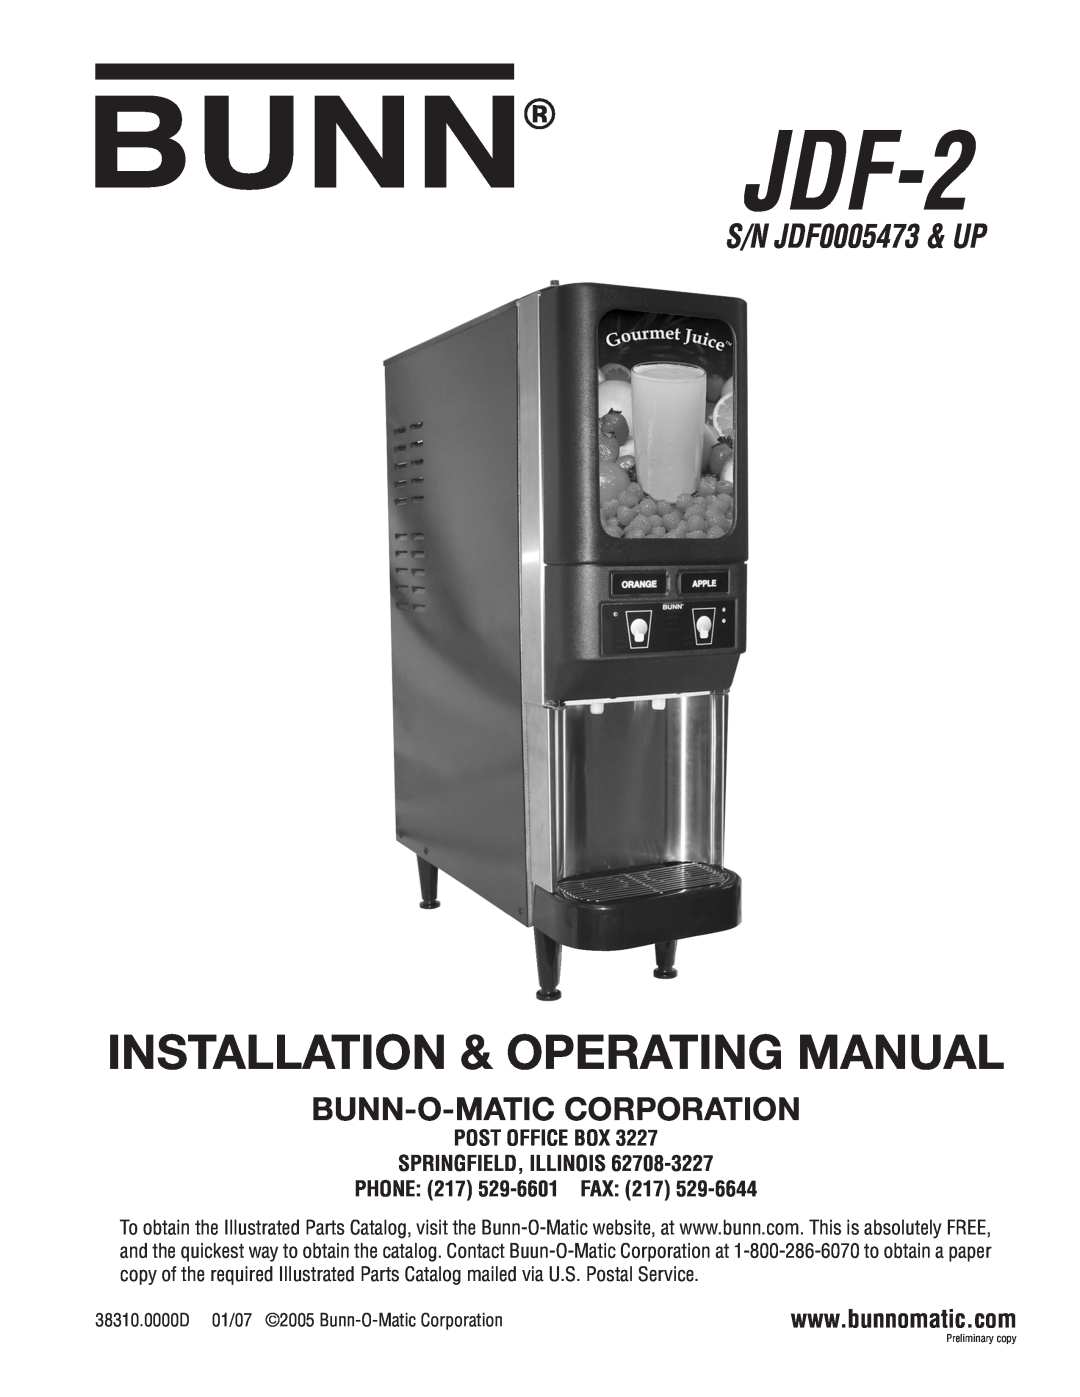 Bunn JDF-2N manual POST OFFICE BOX SPRINGFIELD, ILLINOIS PHONE 217 529-6601 FAX 217, Installation & Operating Manual 